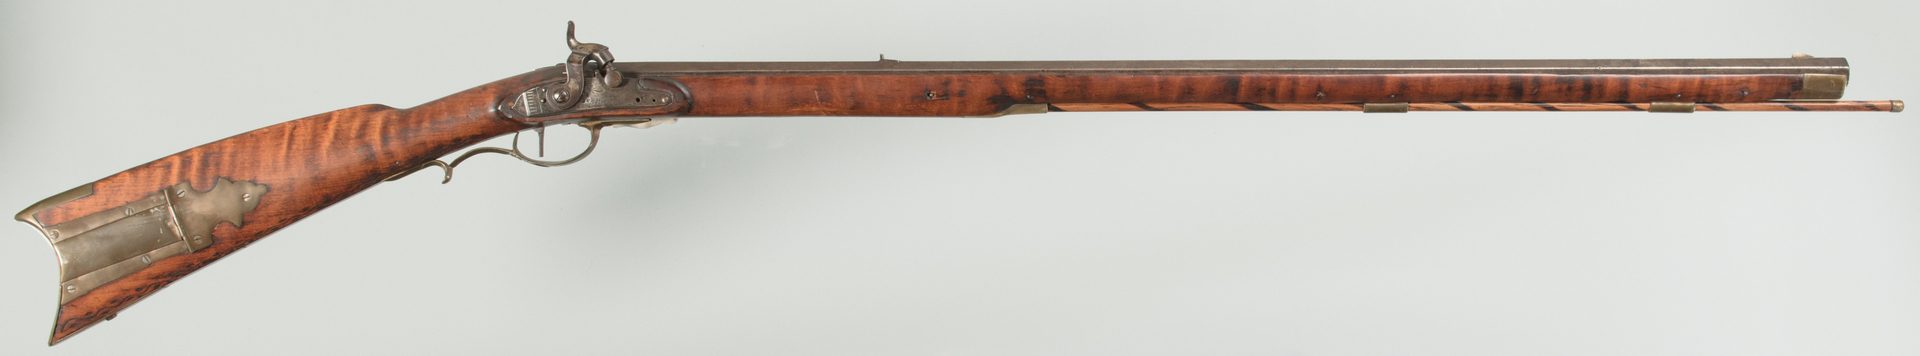 Lot 243: Full Stock Long Rifle, approx. .45 Cal.